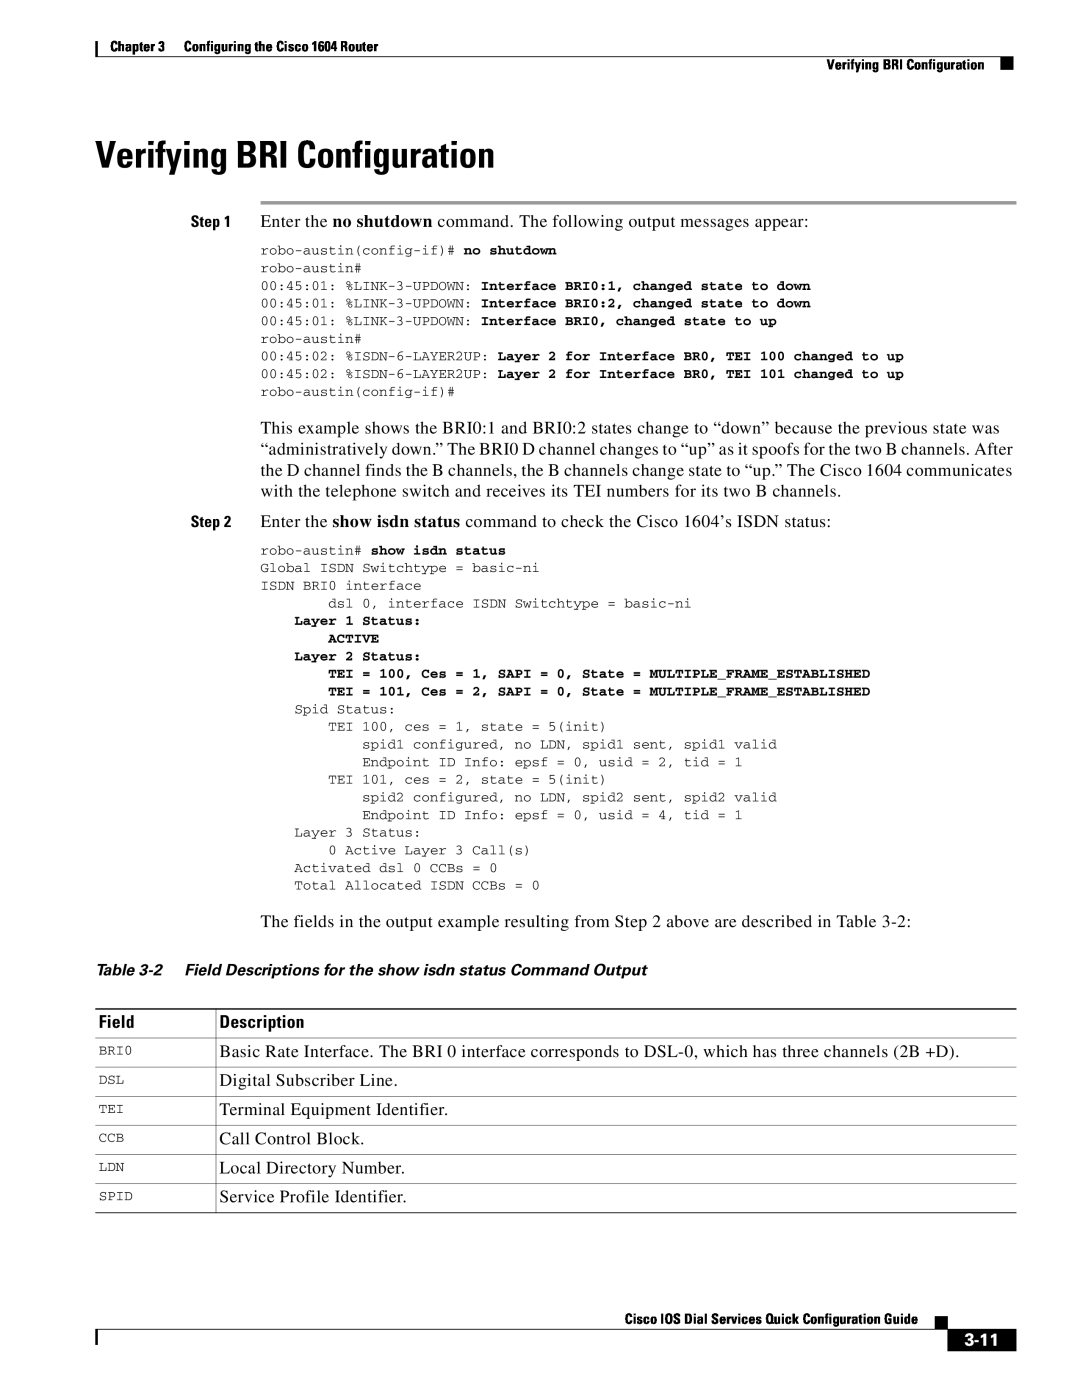 Cisco Systems 1604 manual Verifying BRI Configuration, Field, Description, 3-11 